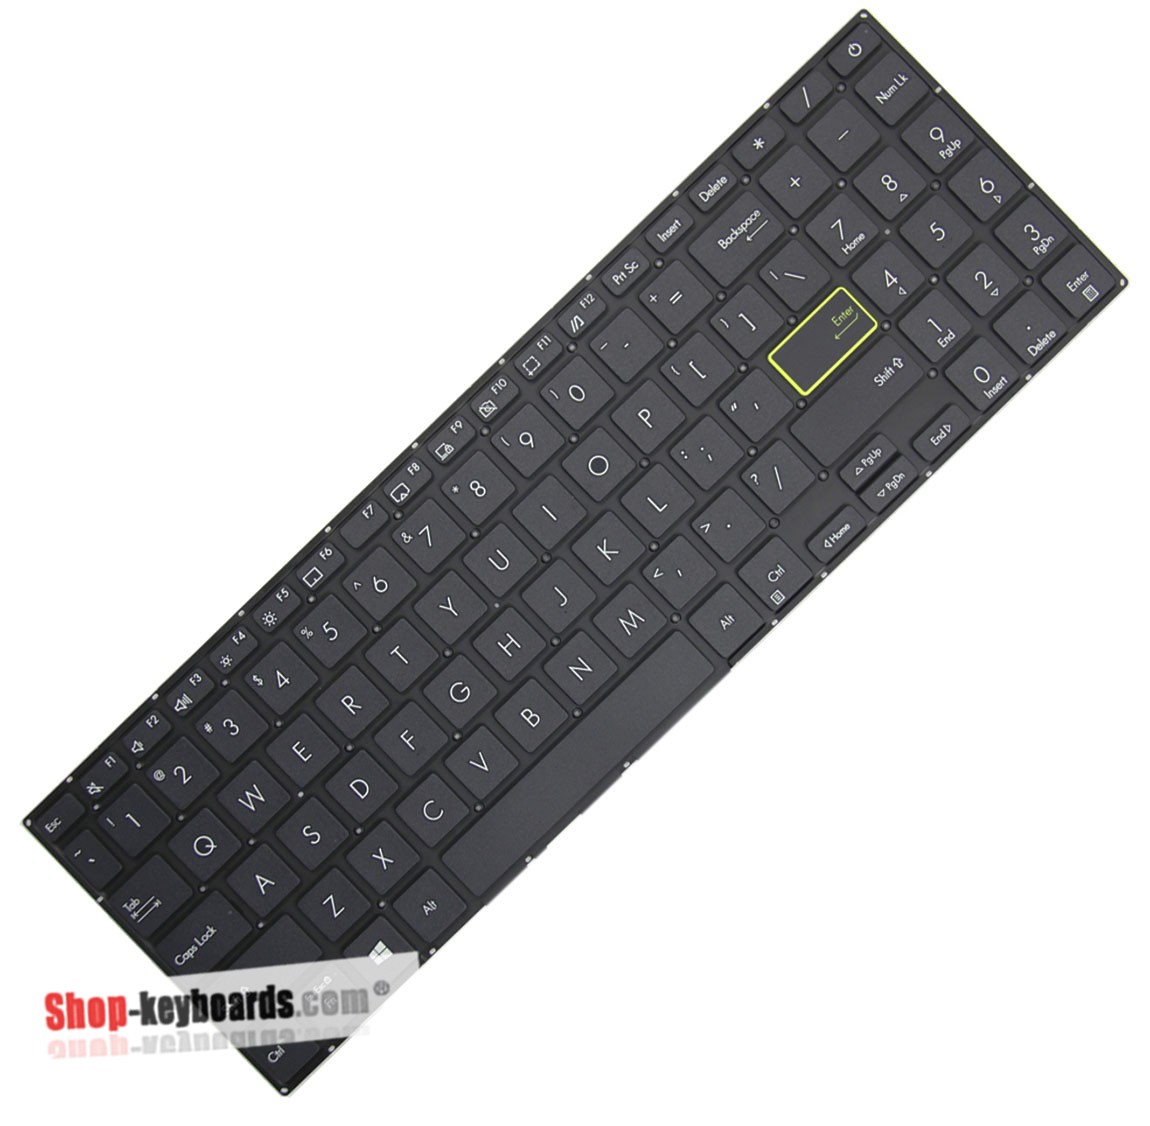 Asus 0KNB0-560KWB00  Keyboard replacement